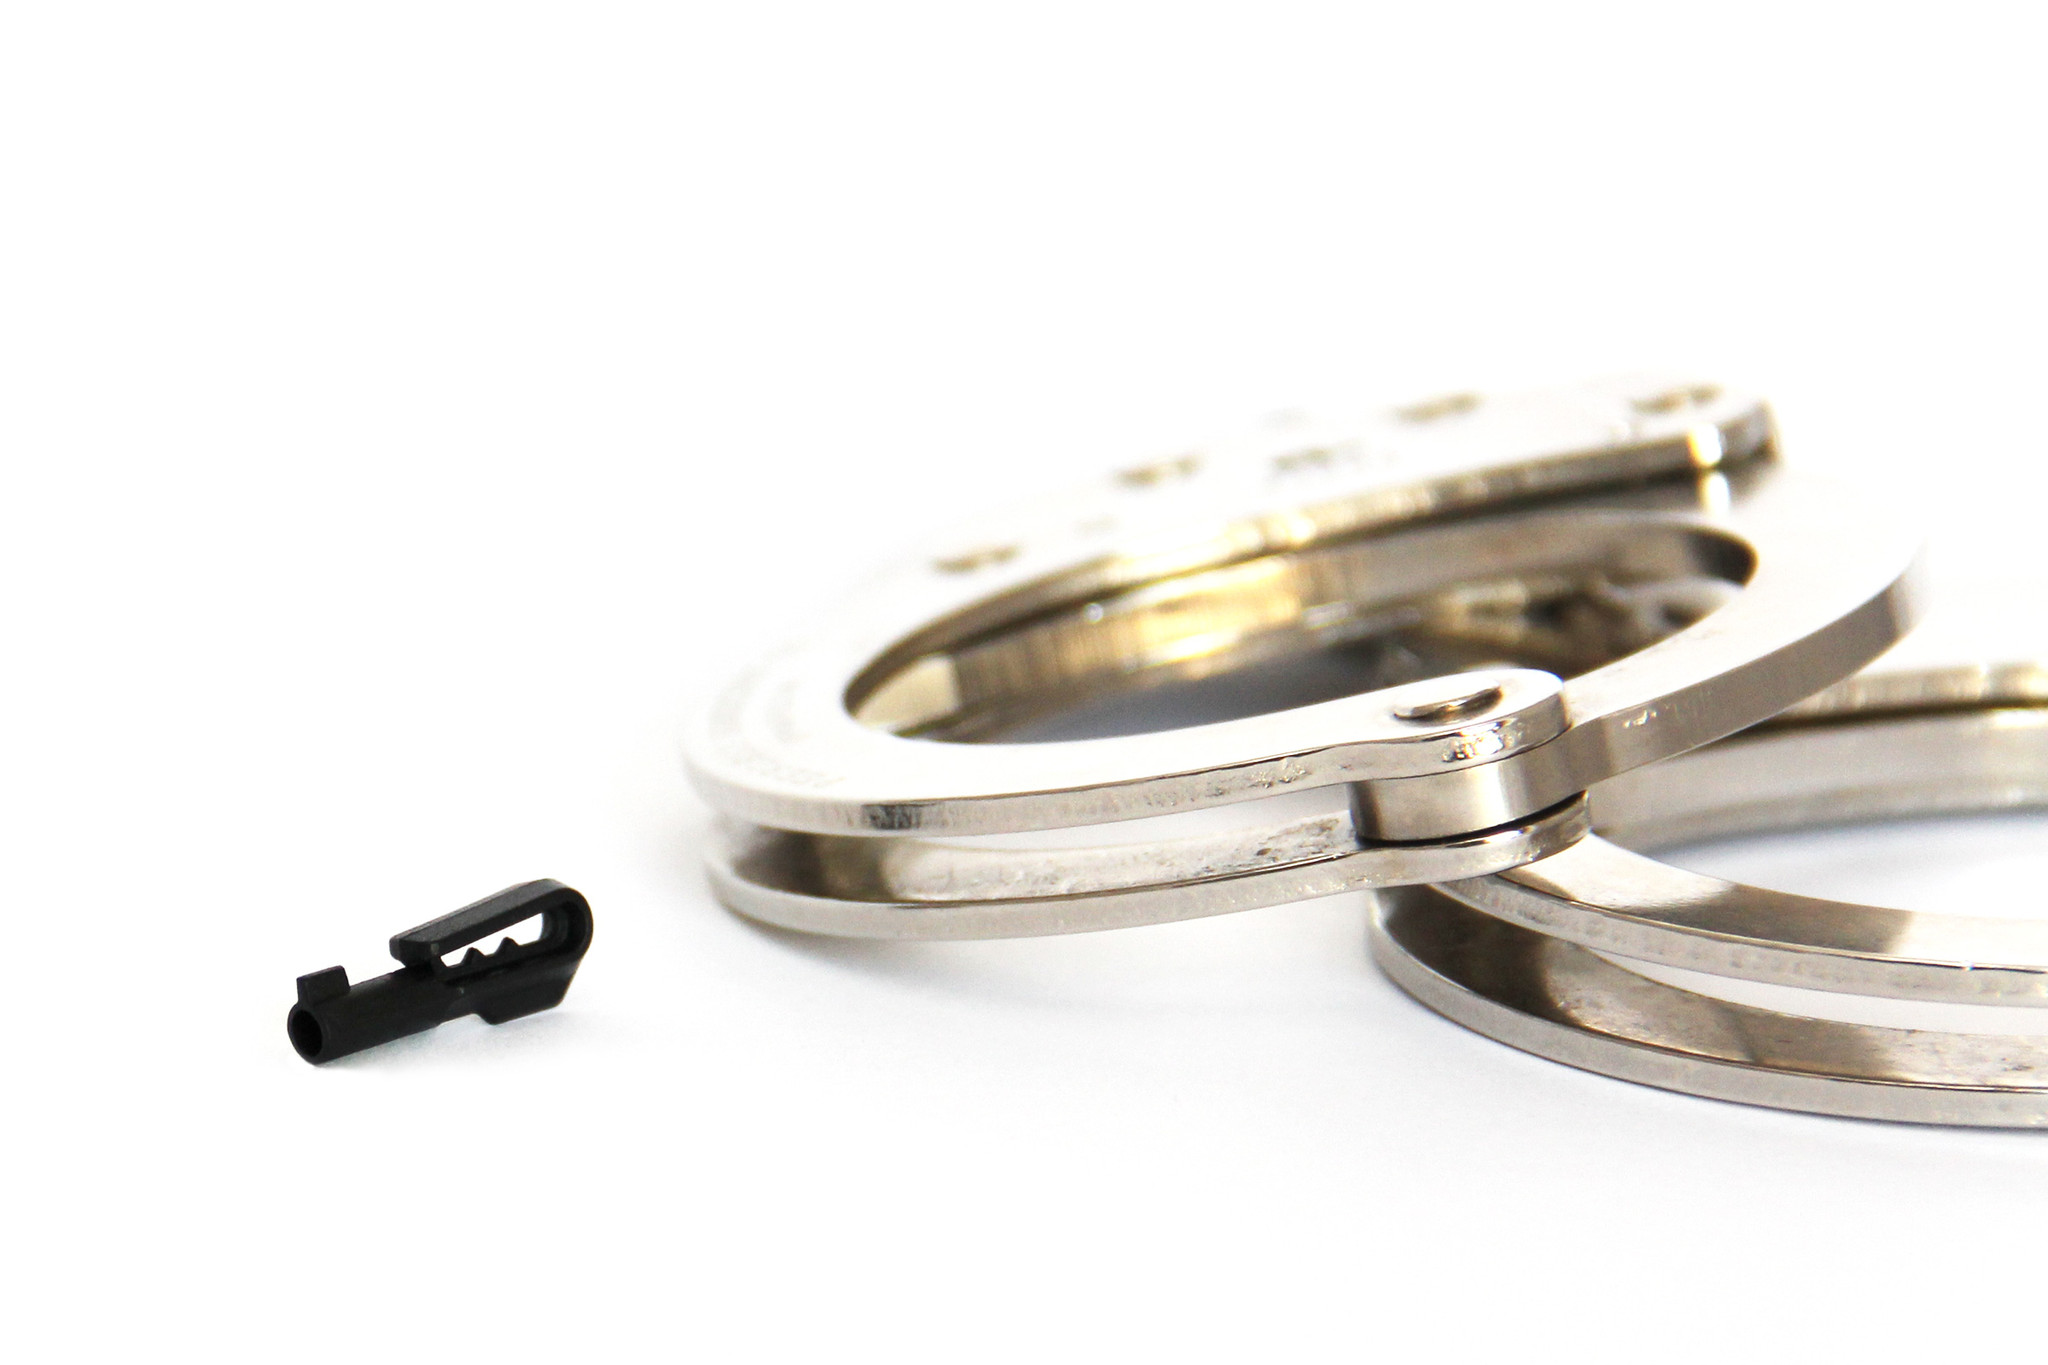 TIHK HK2 Handcuff Key